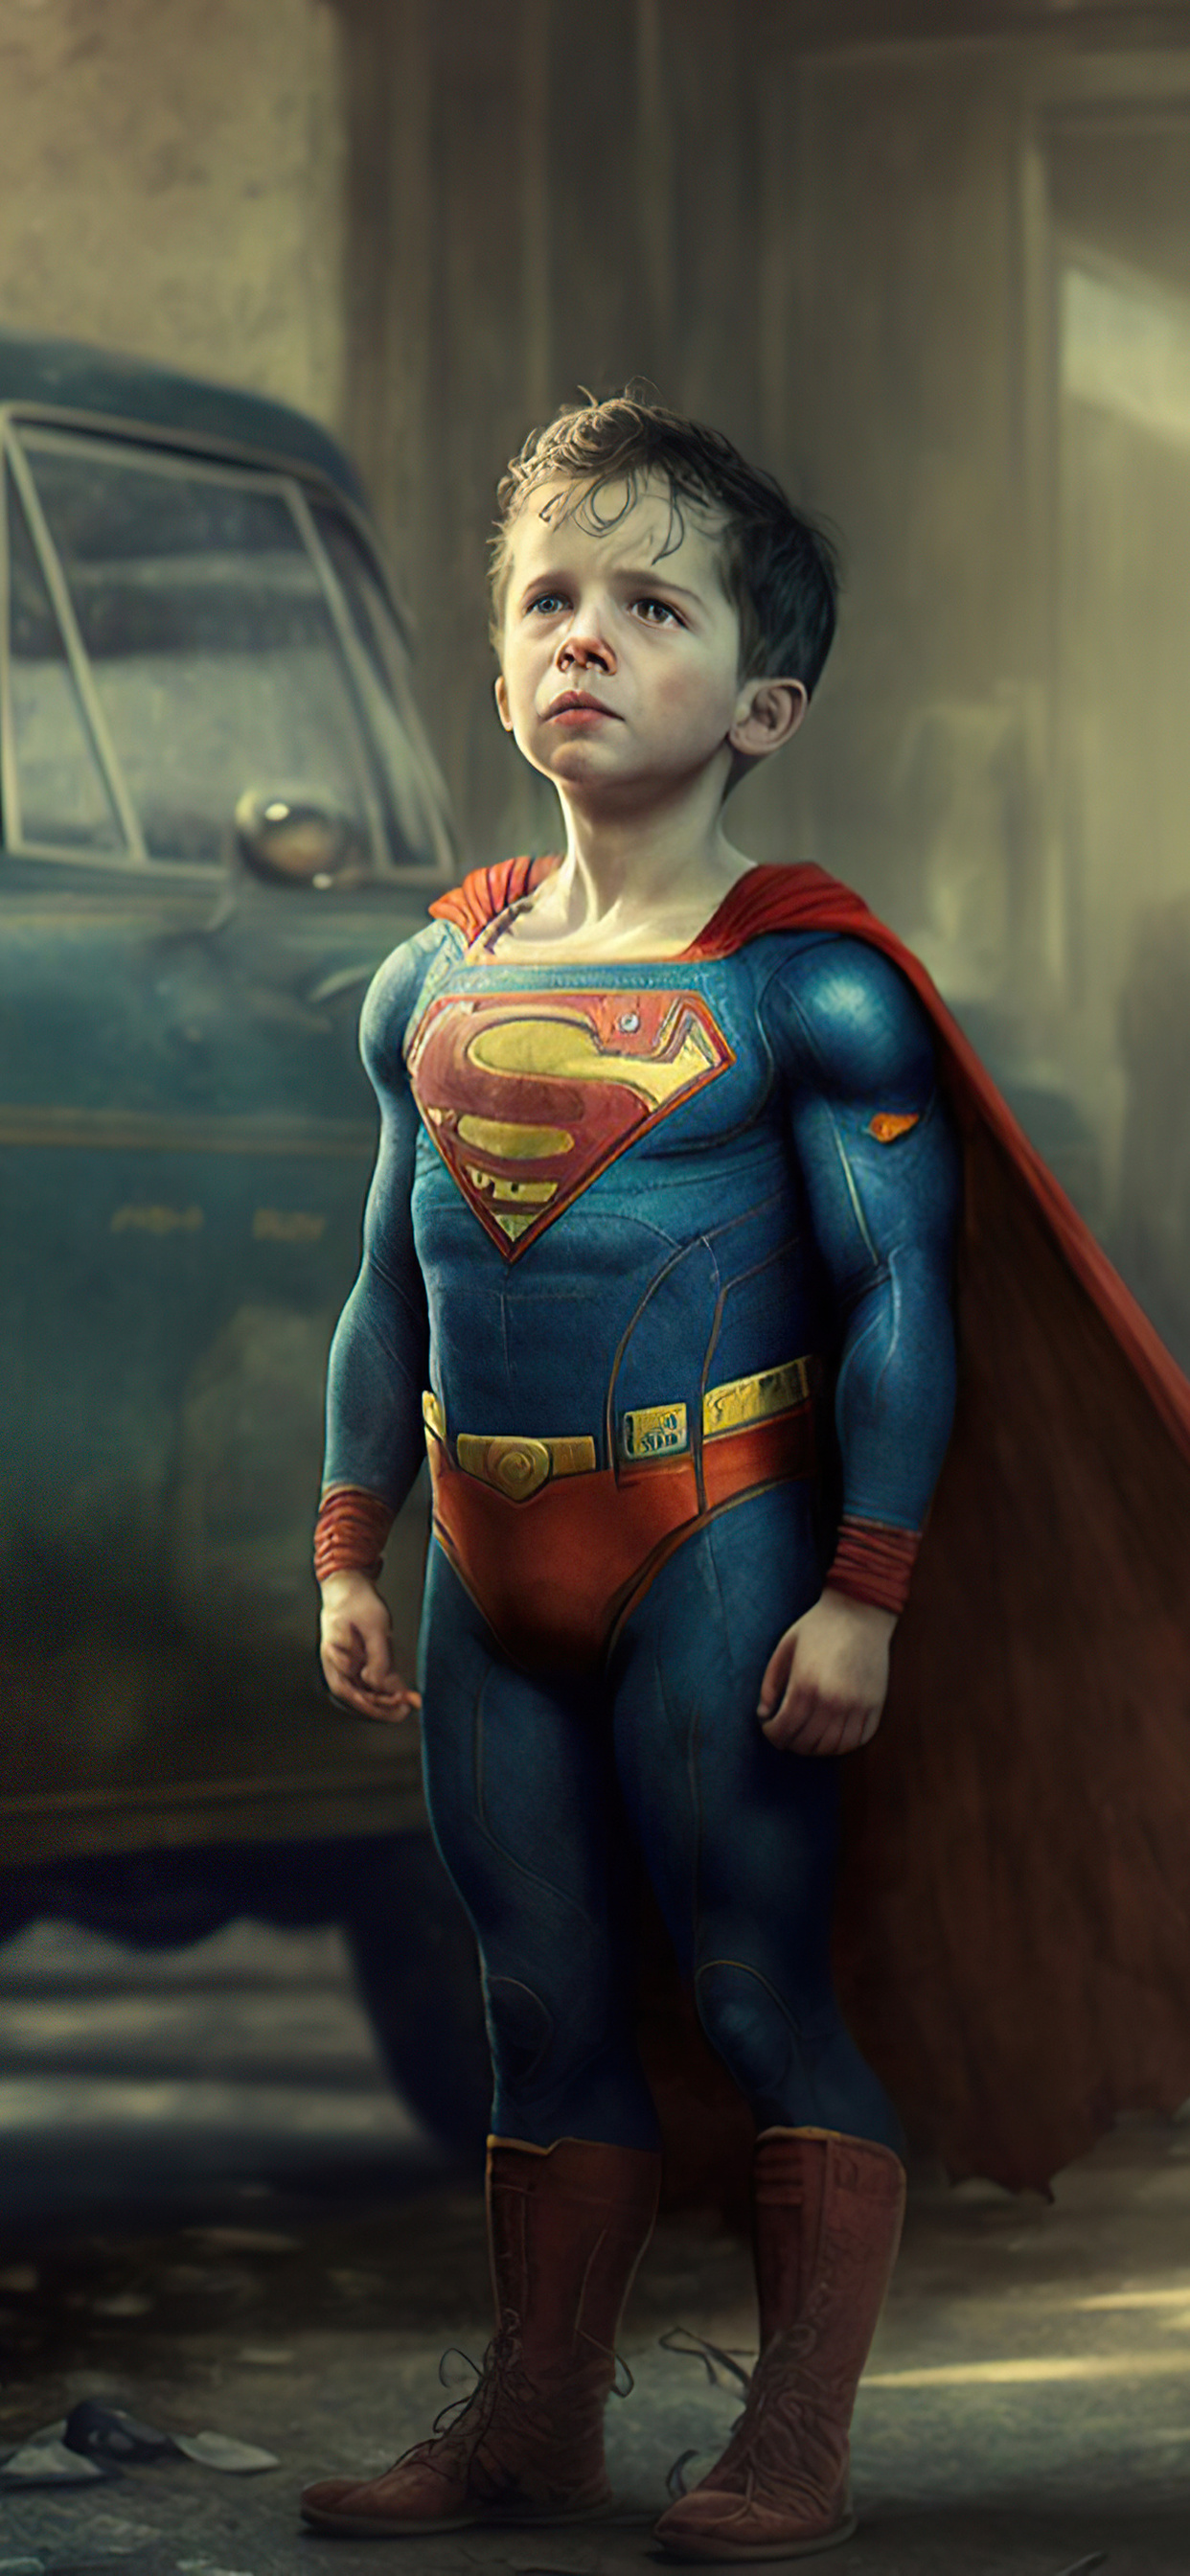 james-gunns-as-child-superman-4k-mx.jpg